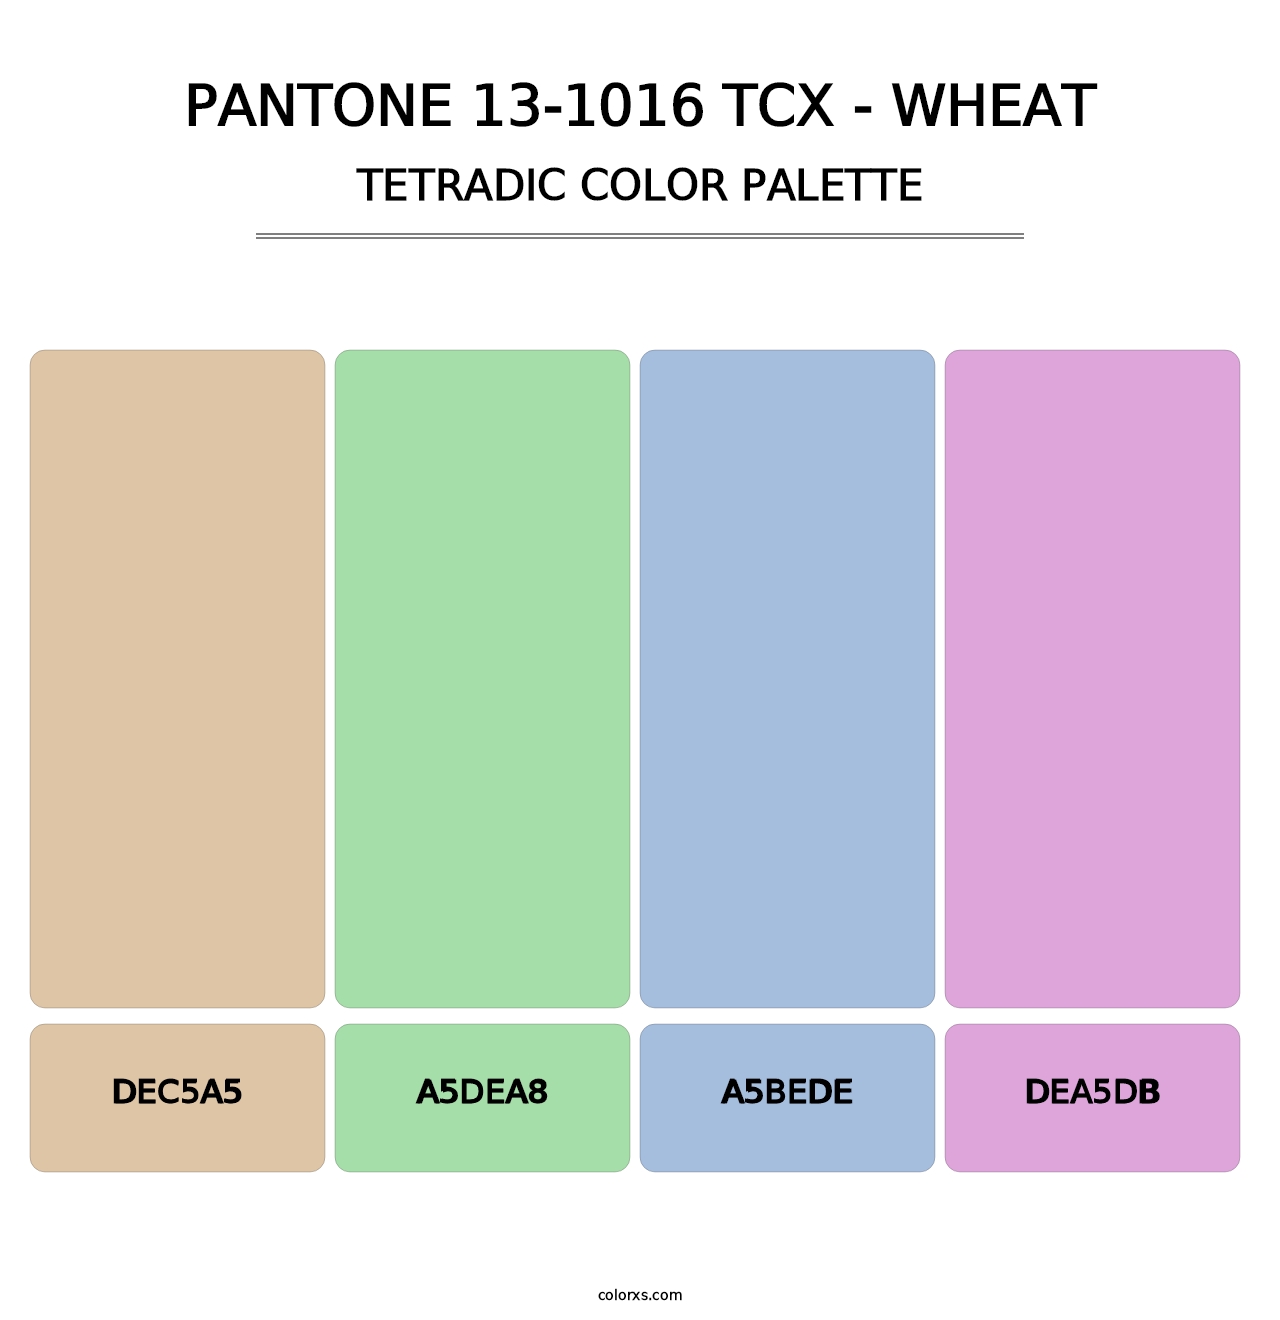 PANTONE 13-1016 TCX - Wheat - Tetradic Color Palette